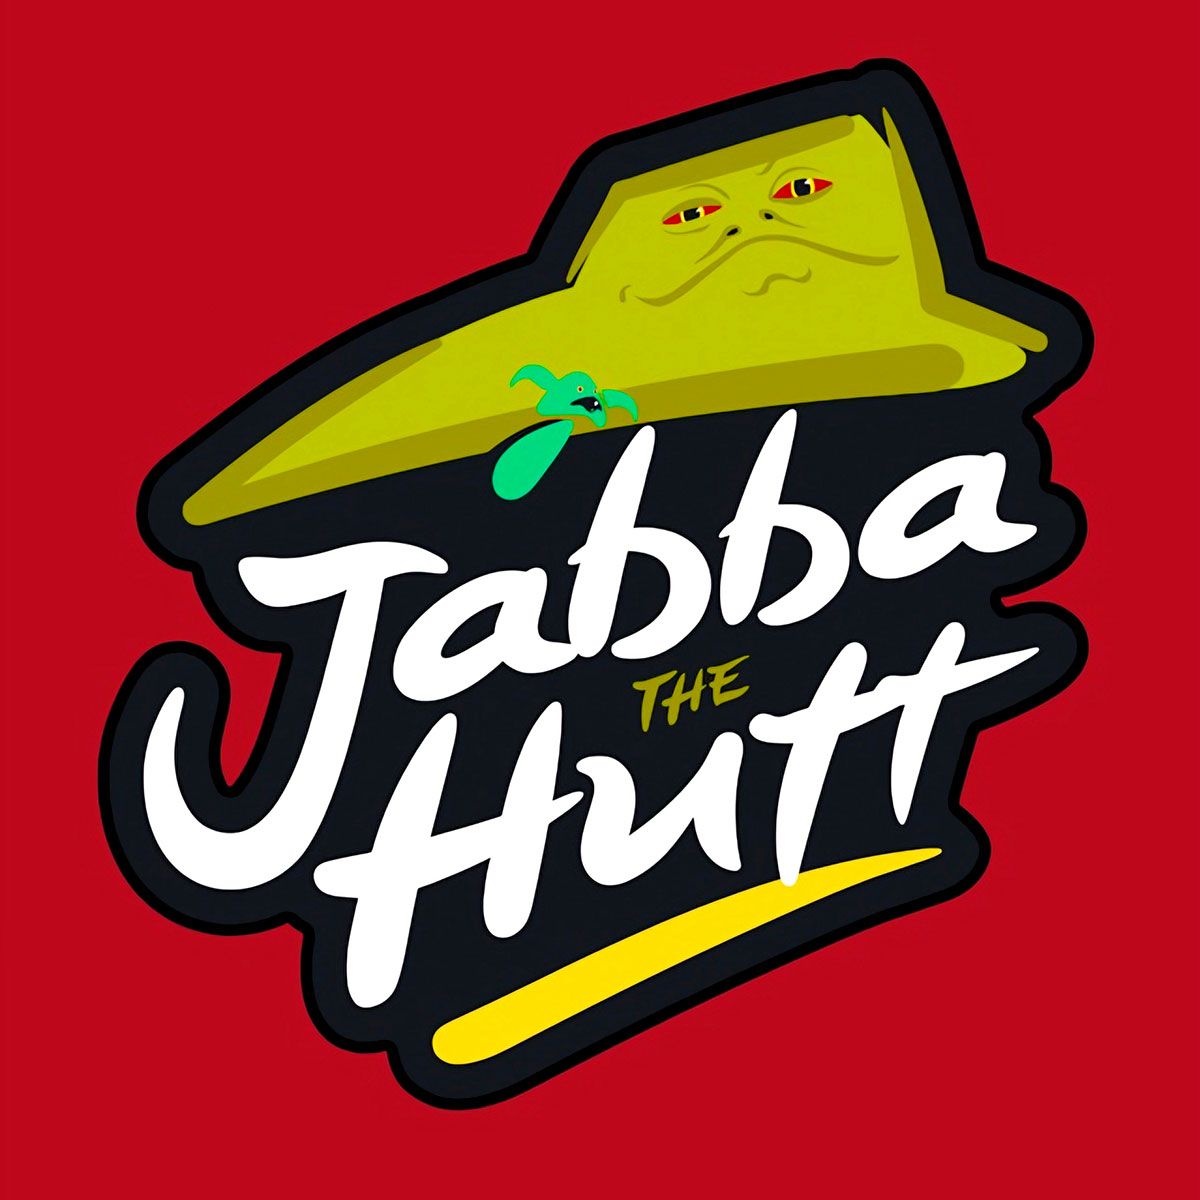 Nome do produto: Jabba the Hutt